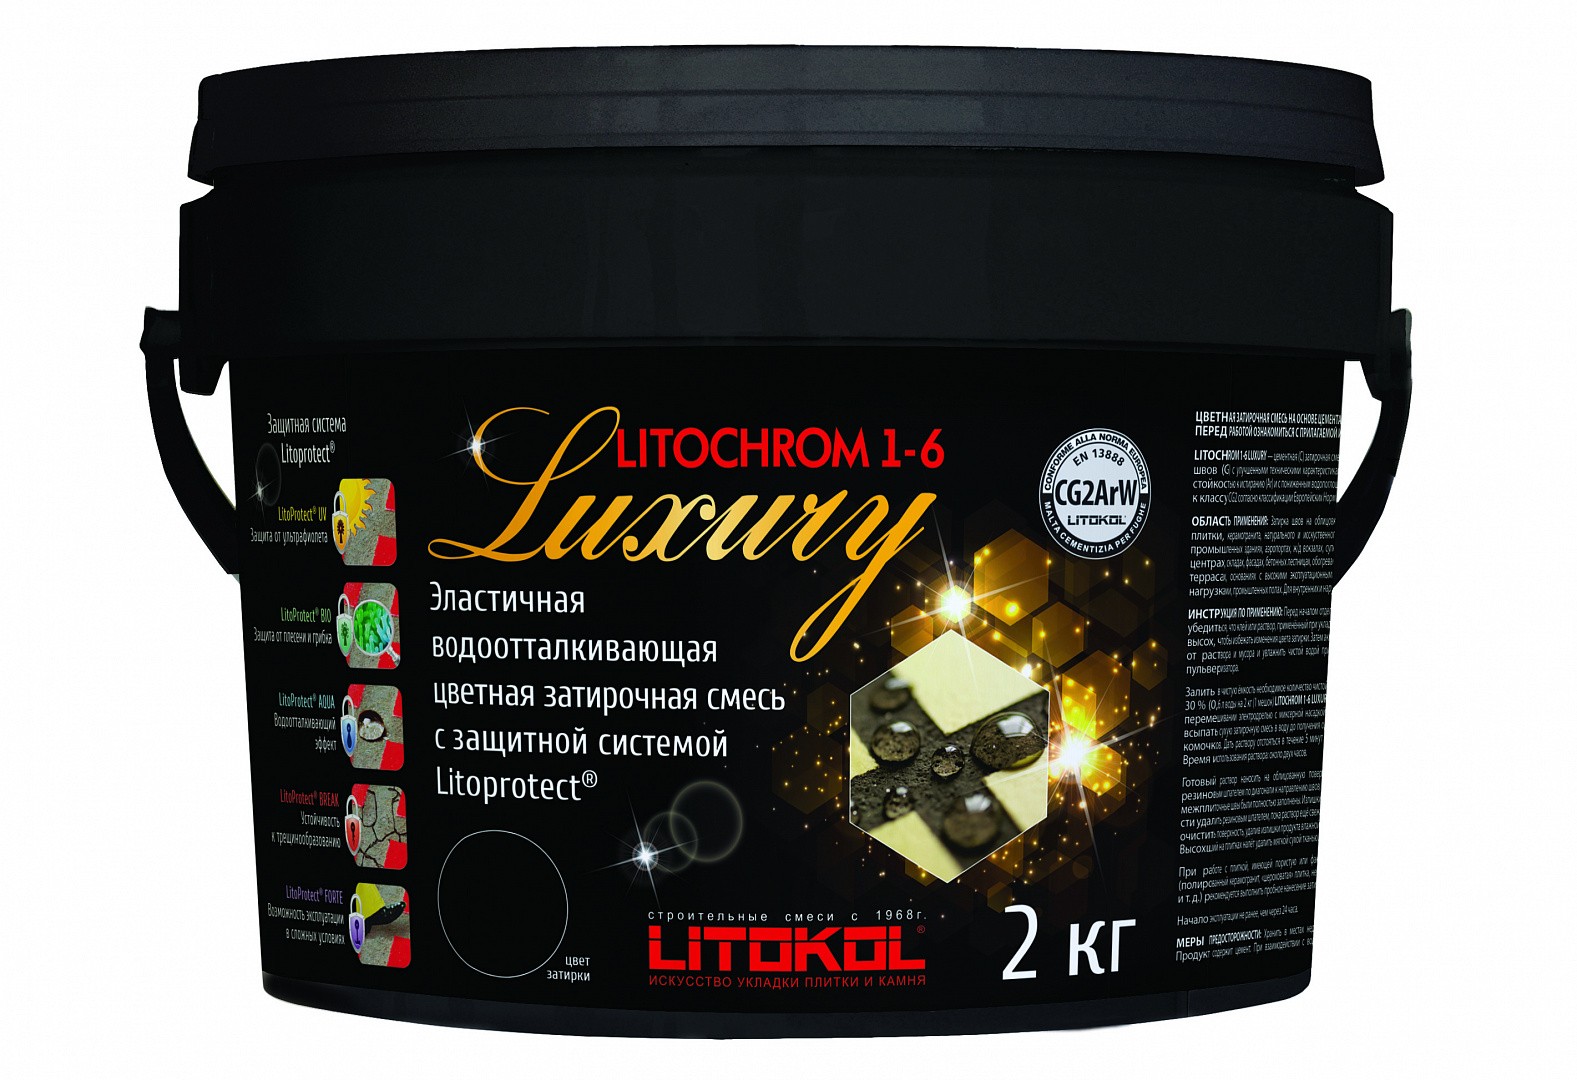 Цементная затирочная смесь LITOCHROM 1-6 LUXURY C.130